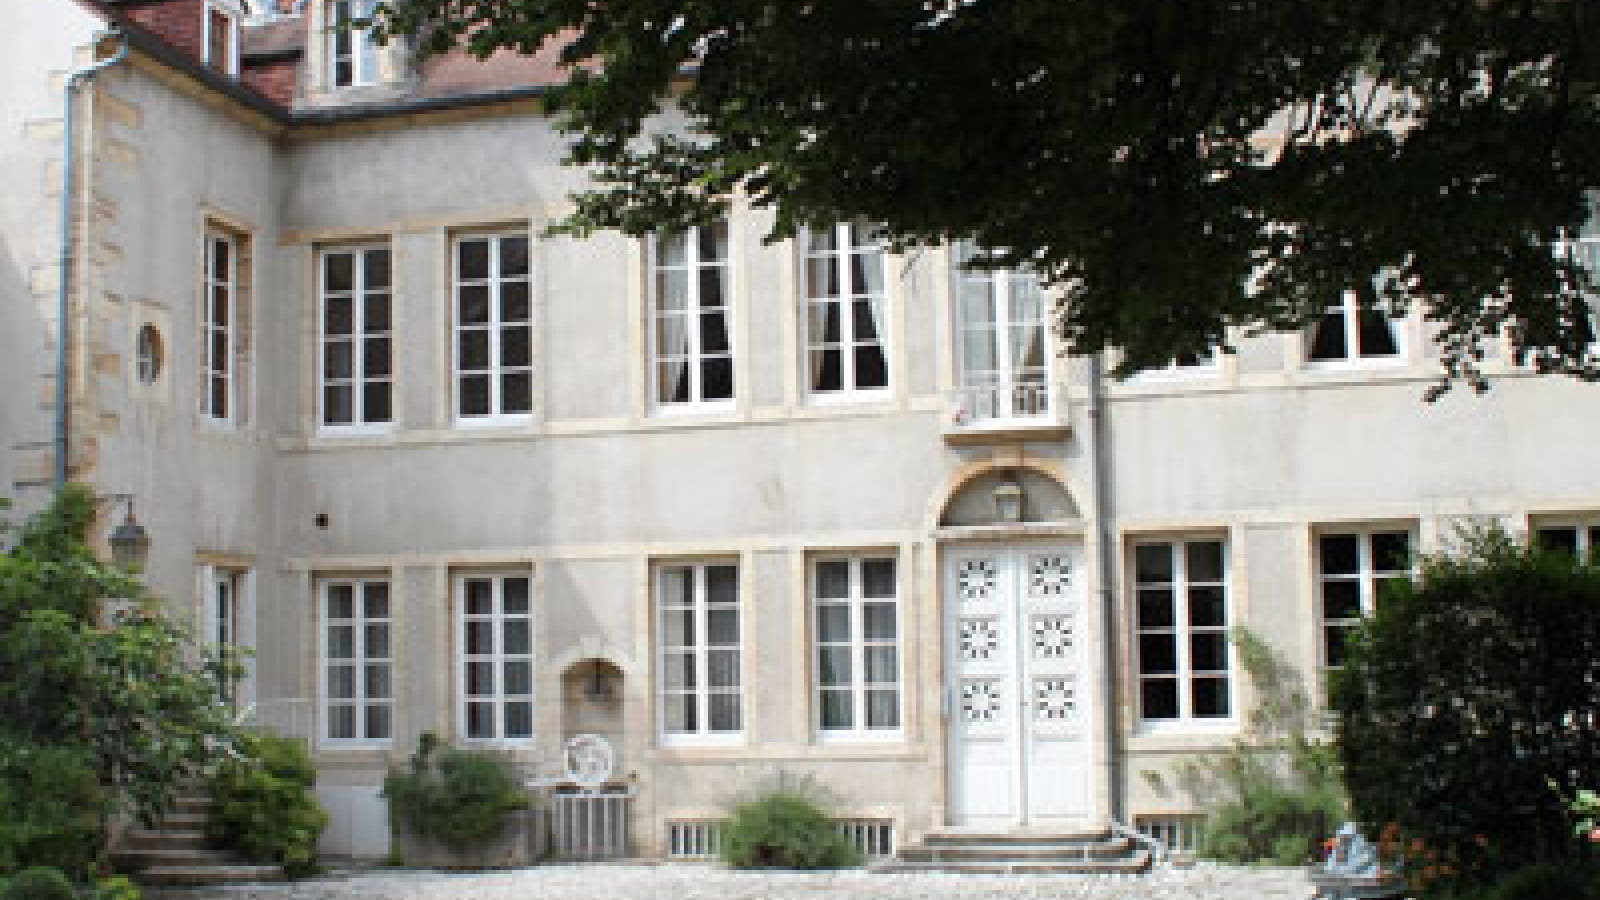 Hôtel Jehanin de Chamblanc (ou d'Arviset)